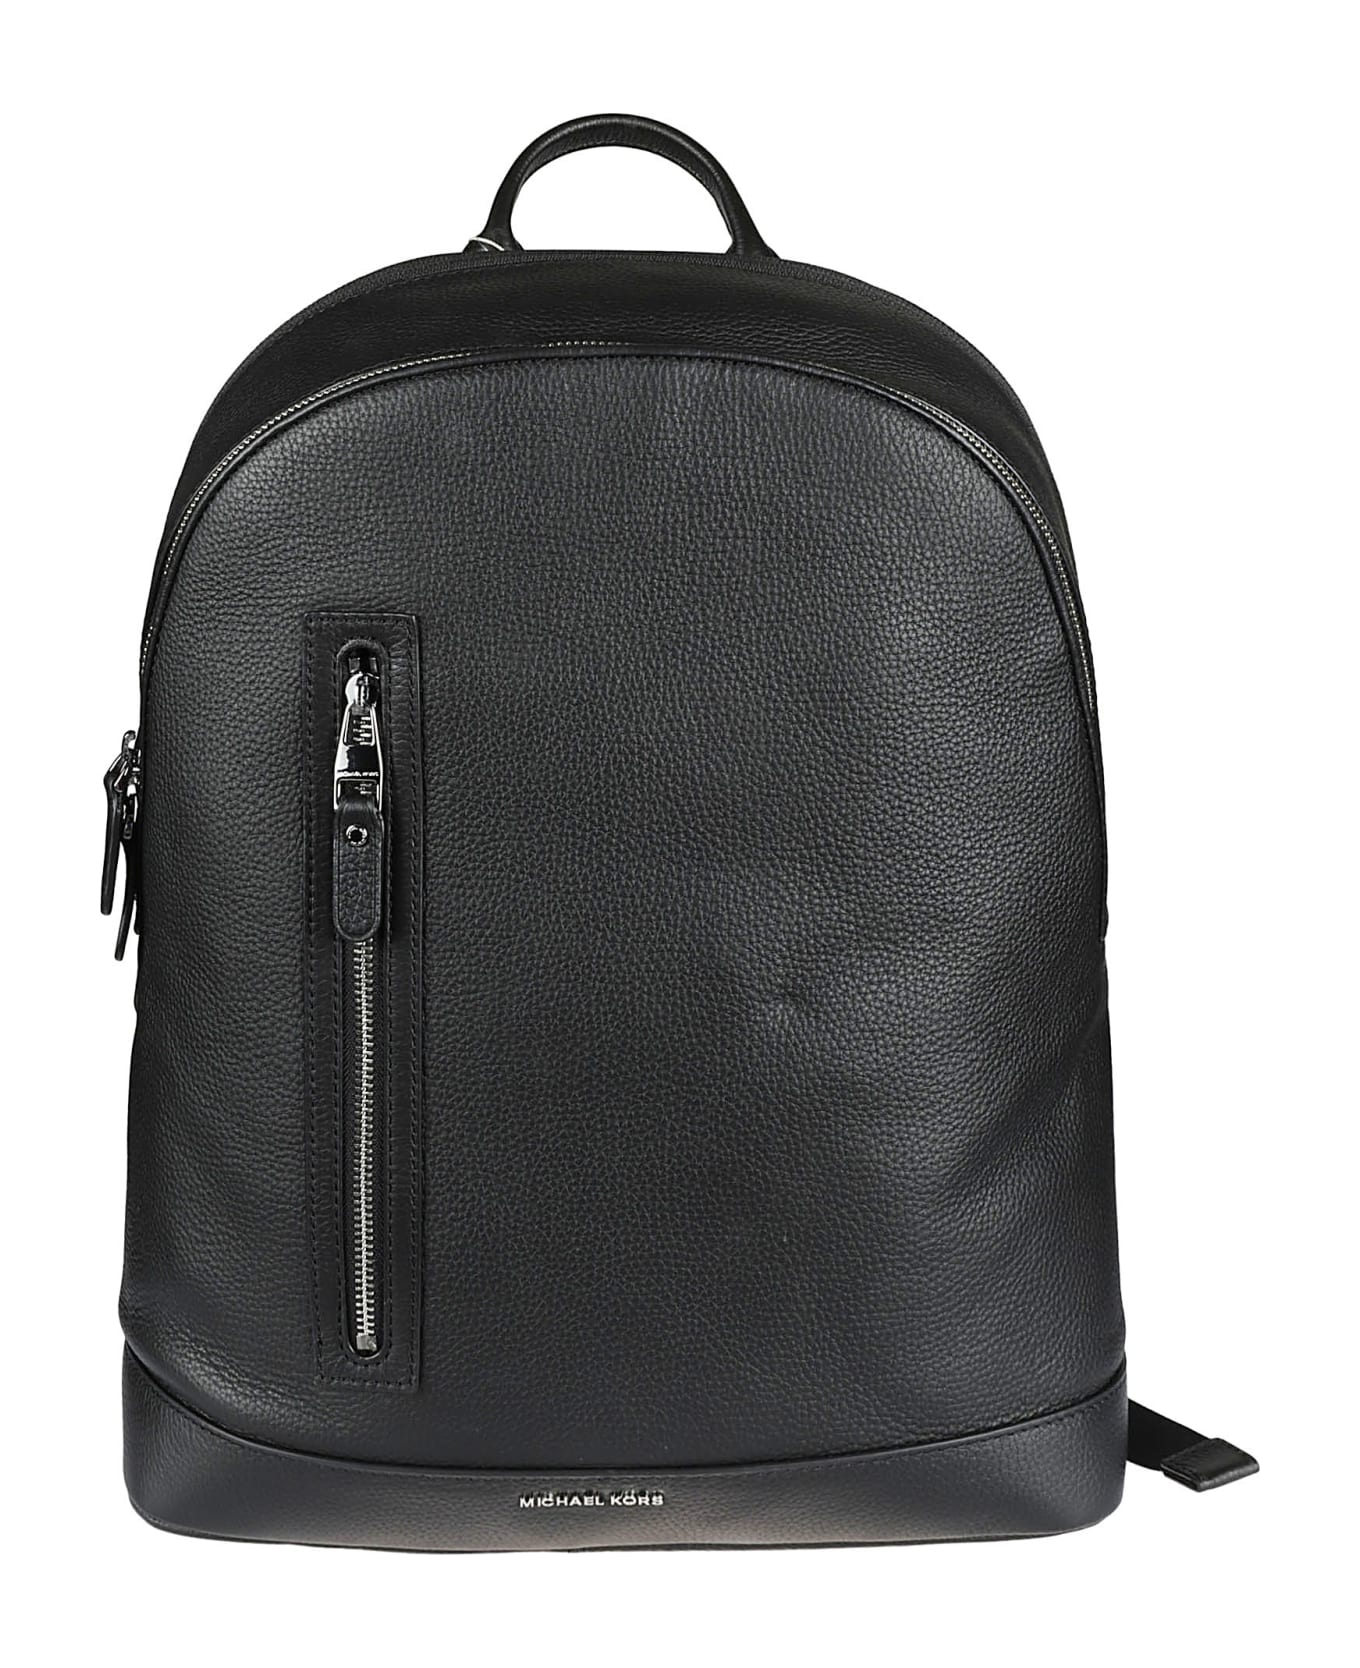 Michael Kors Zipped Backpack - Black